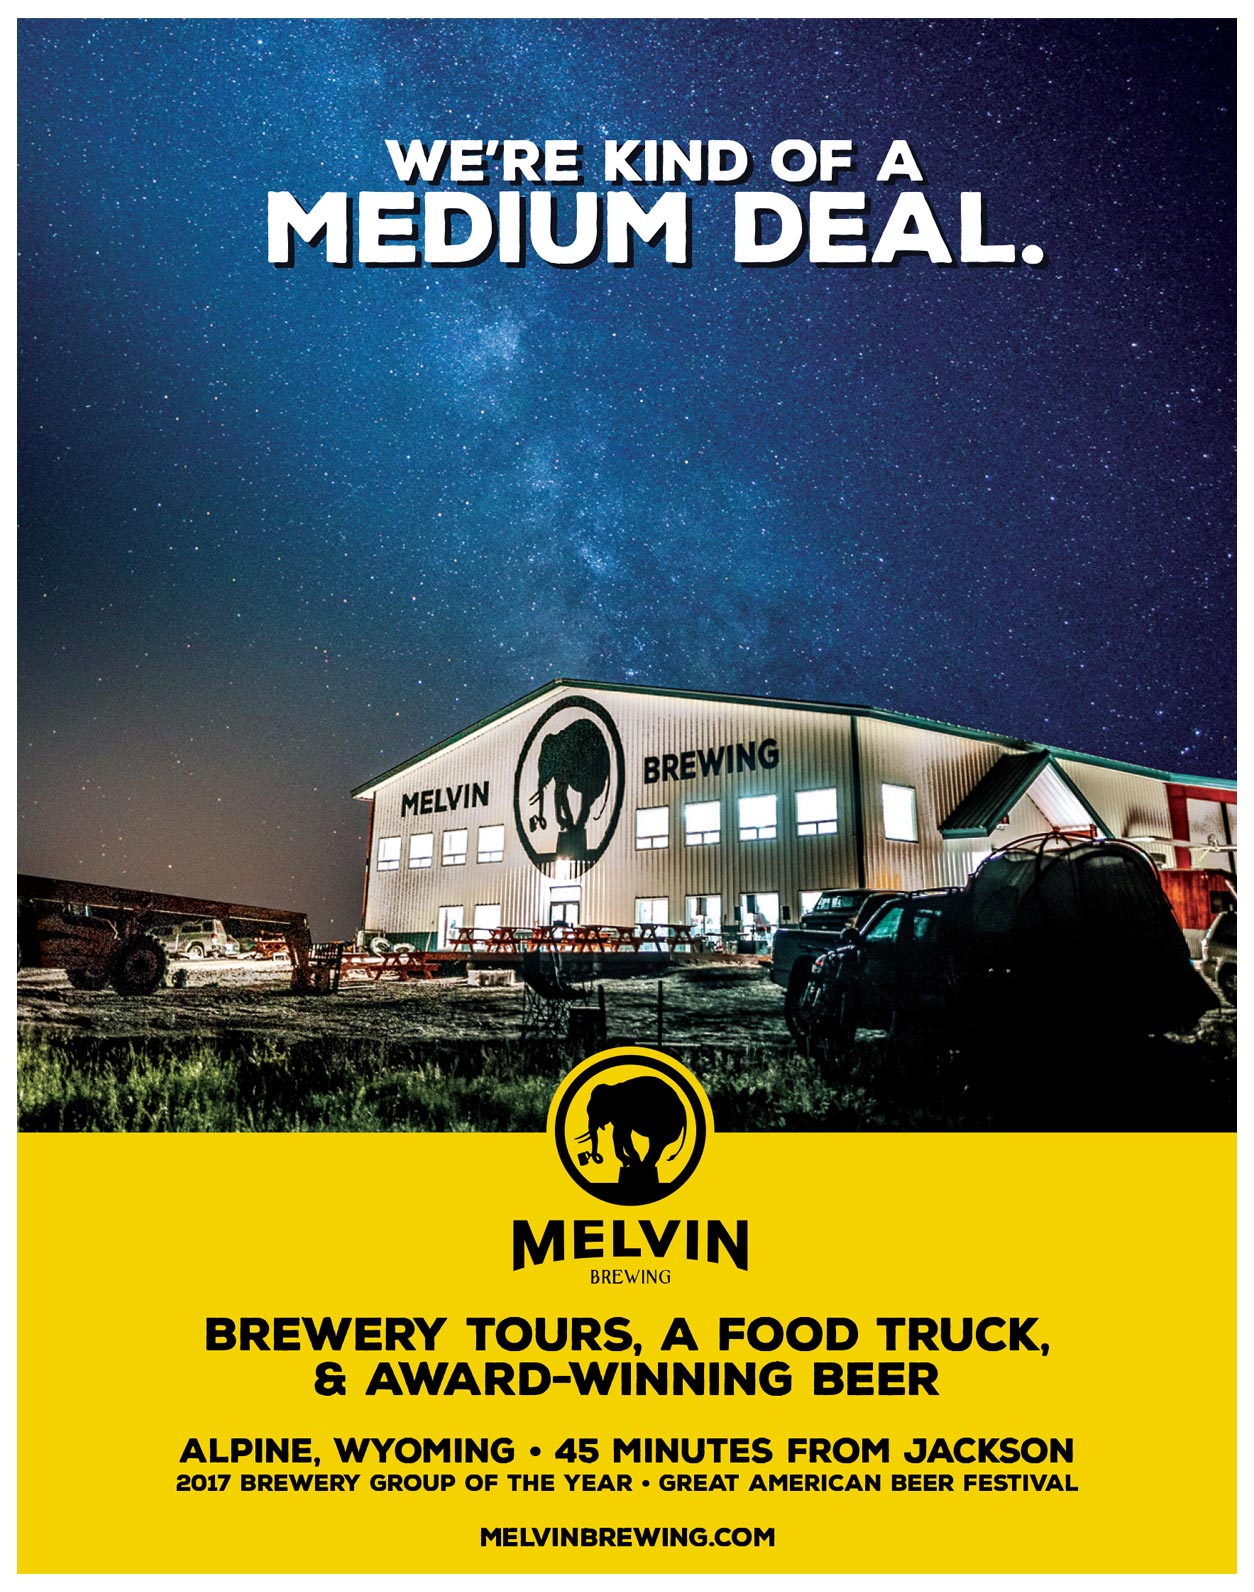 Melvin-Brewing-Medium-Deal-Ad-mobile